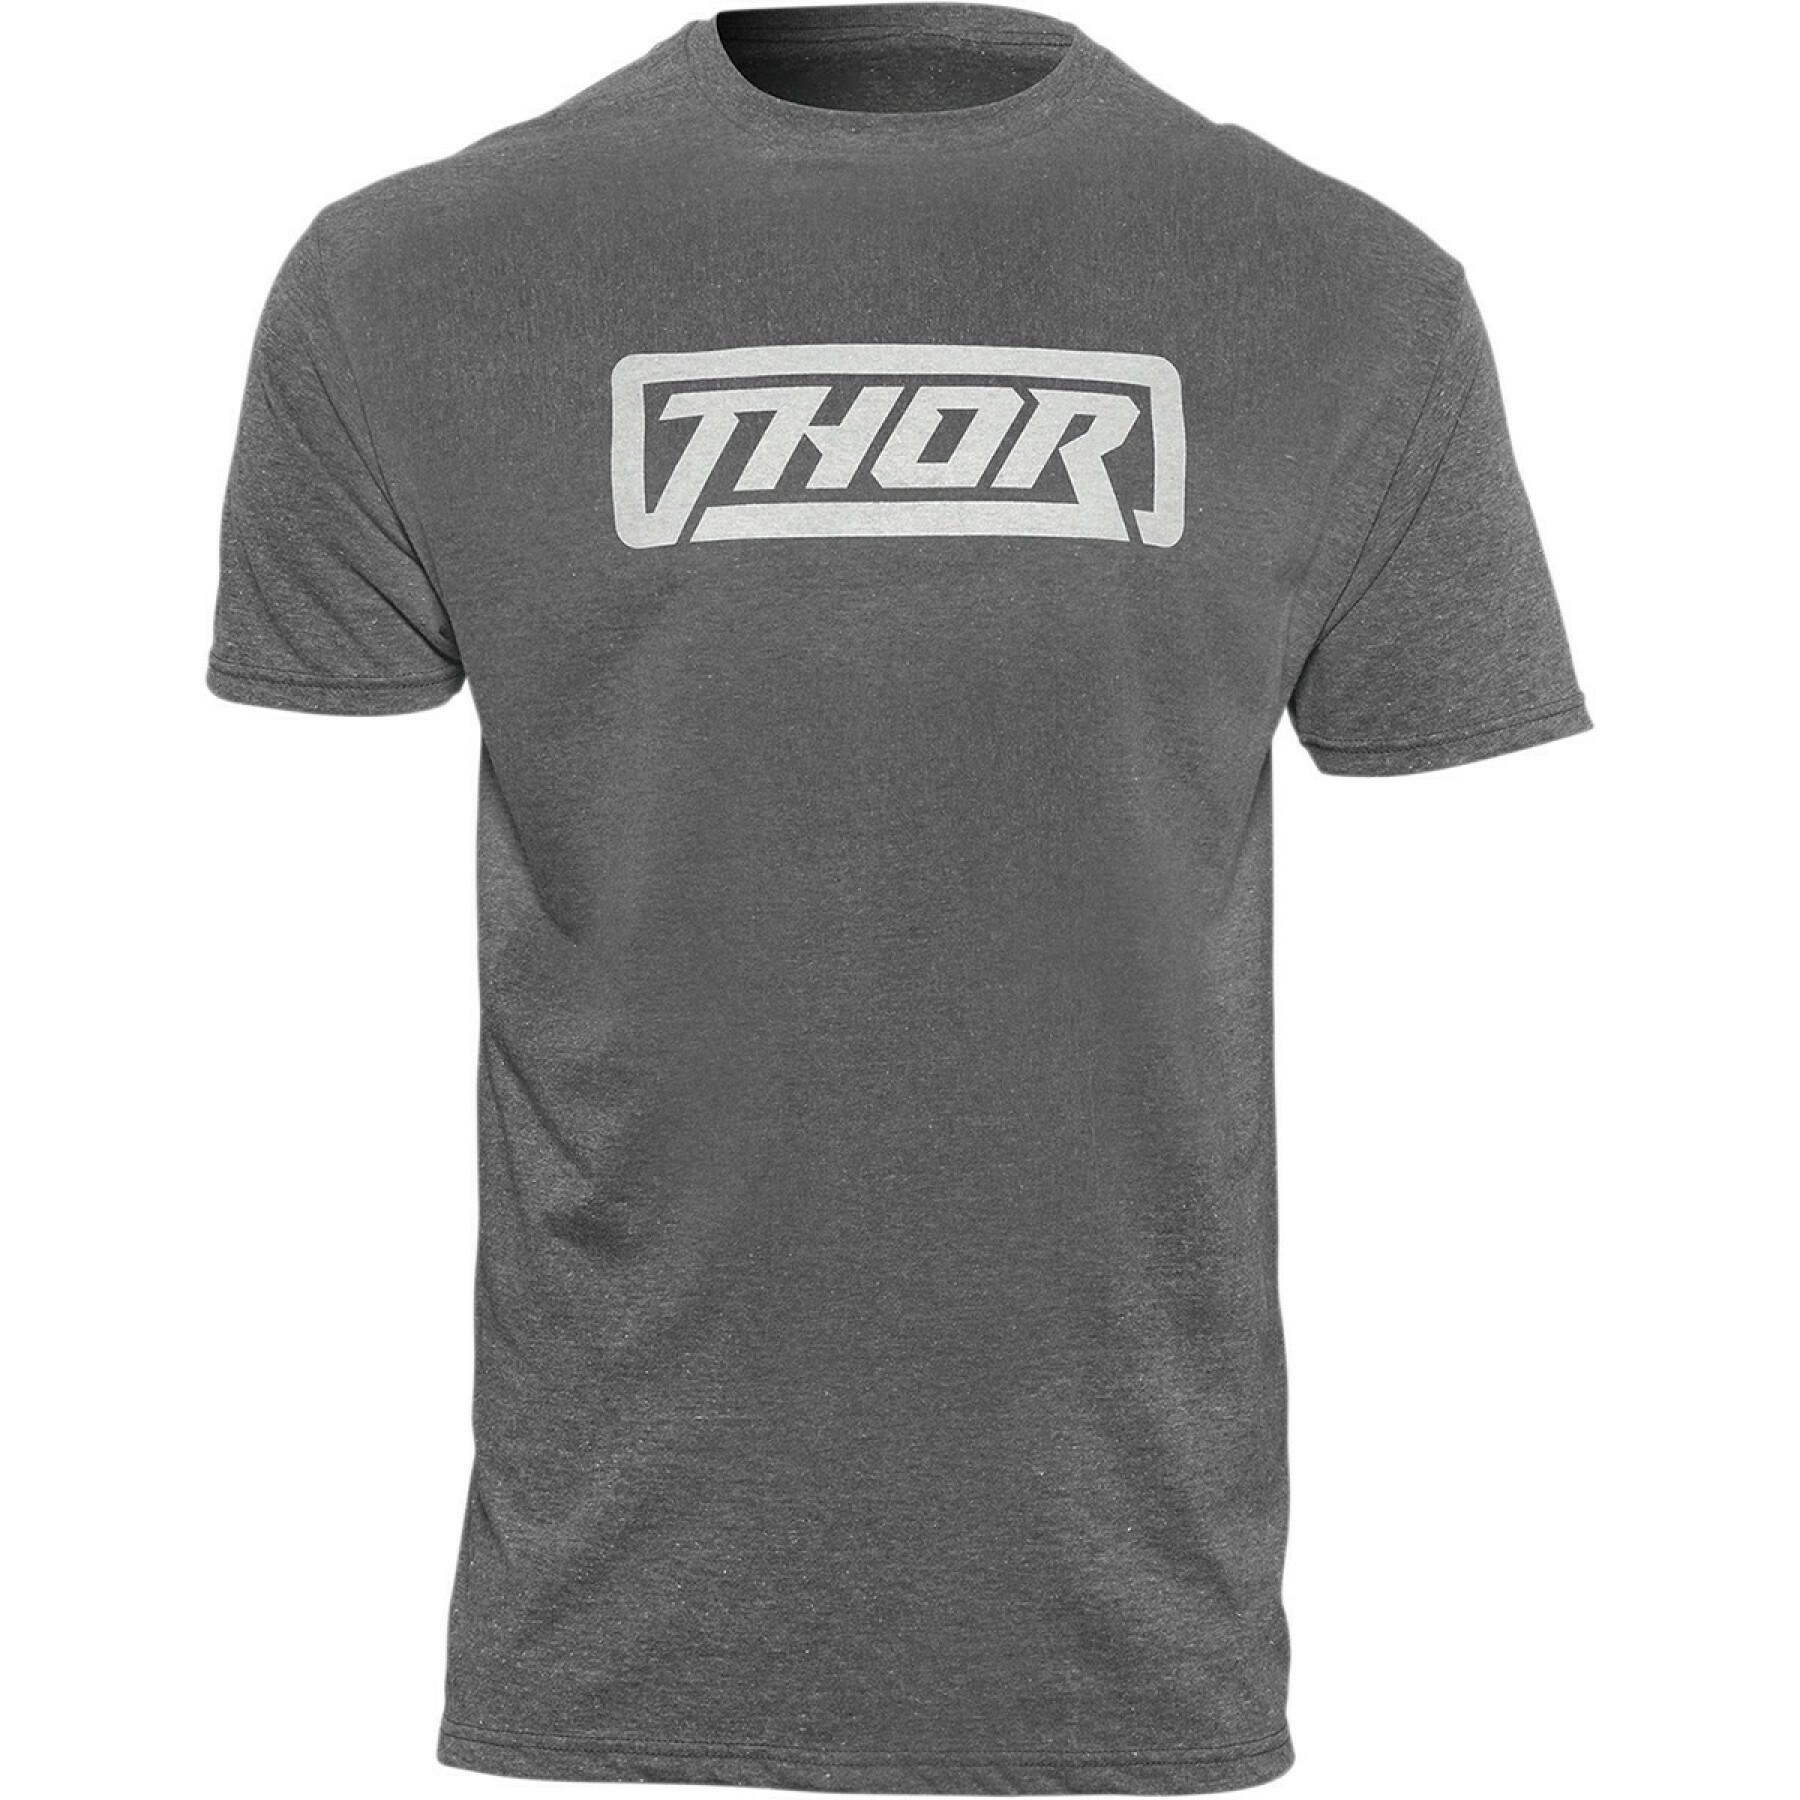 Maglietta Thor icon heather